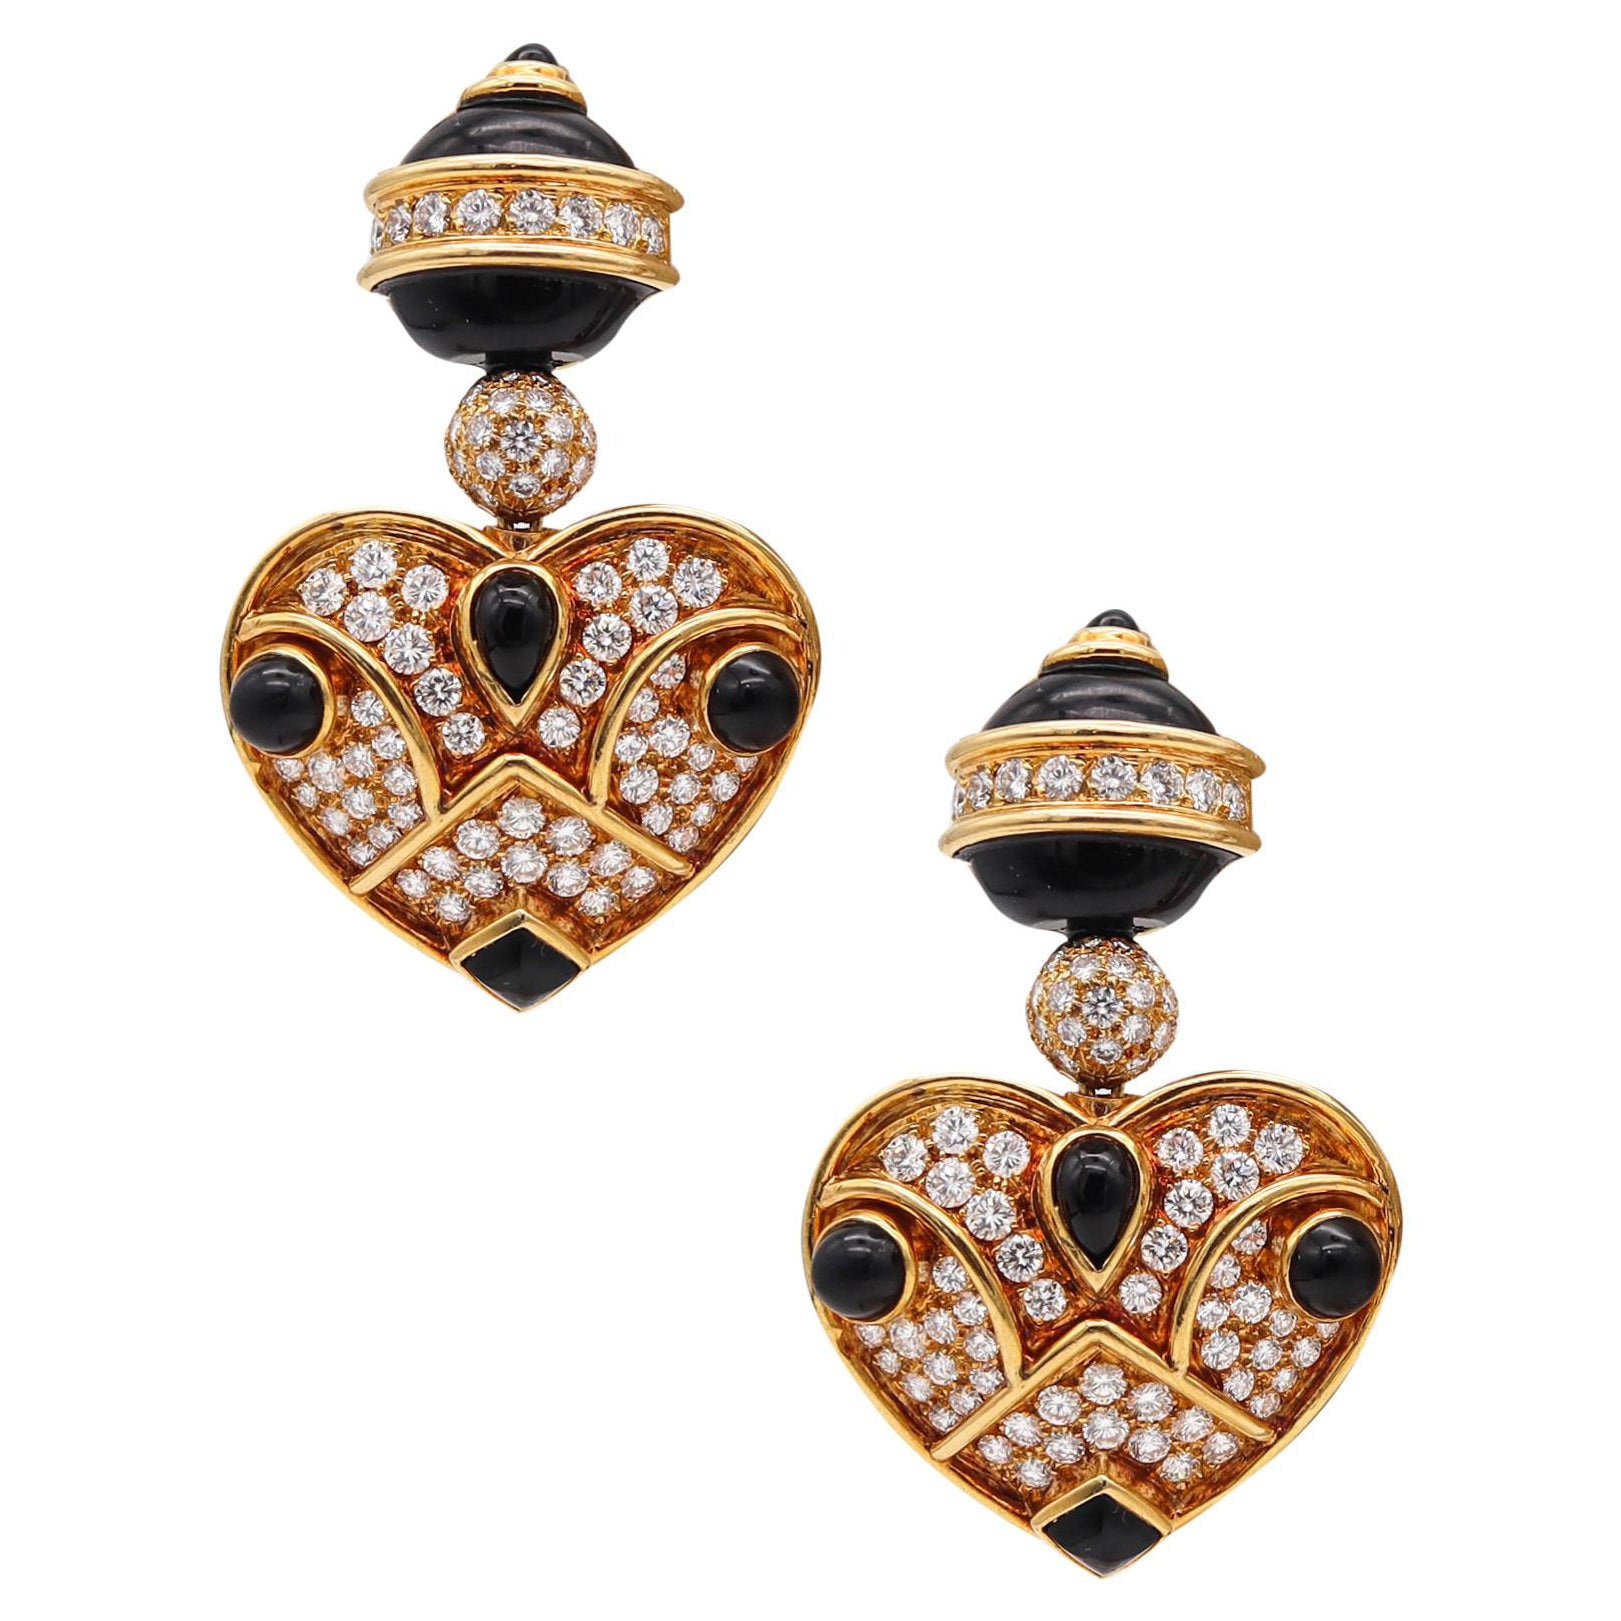 Marina B. Milan Gem Set Clips Earrings 18Kt Gold with 13.22 Cts Diamonds & Onyx